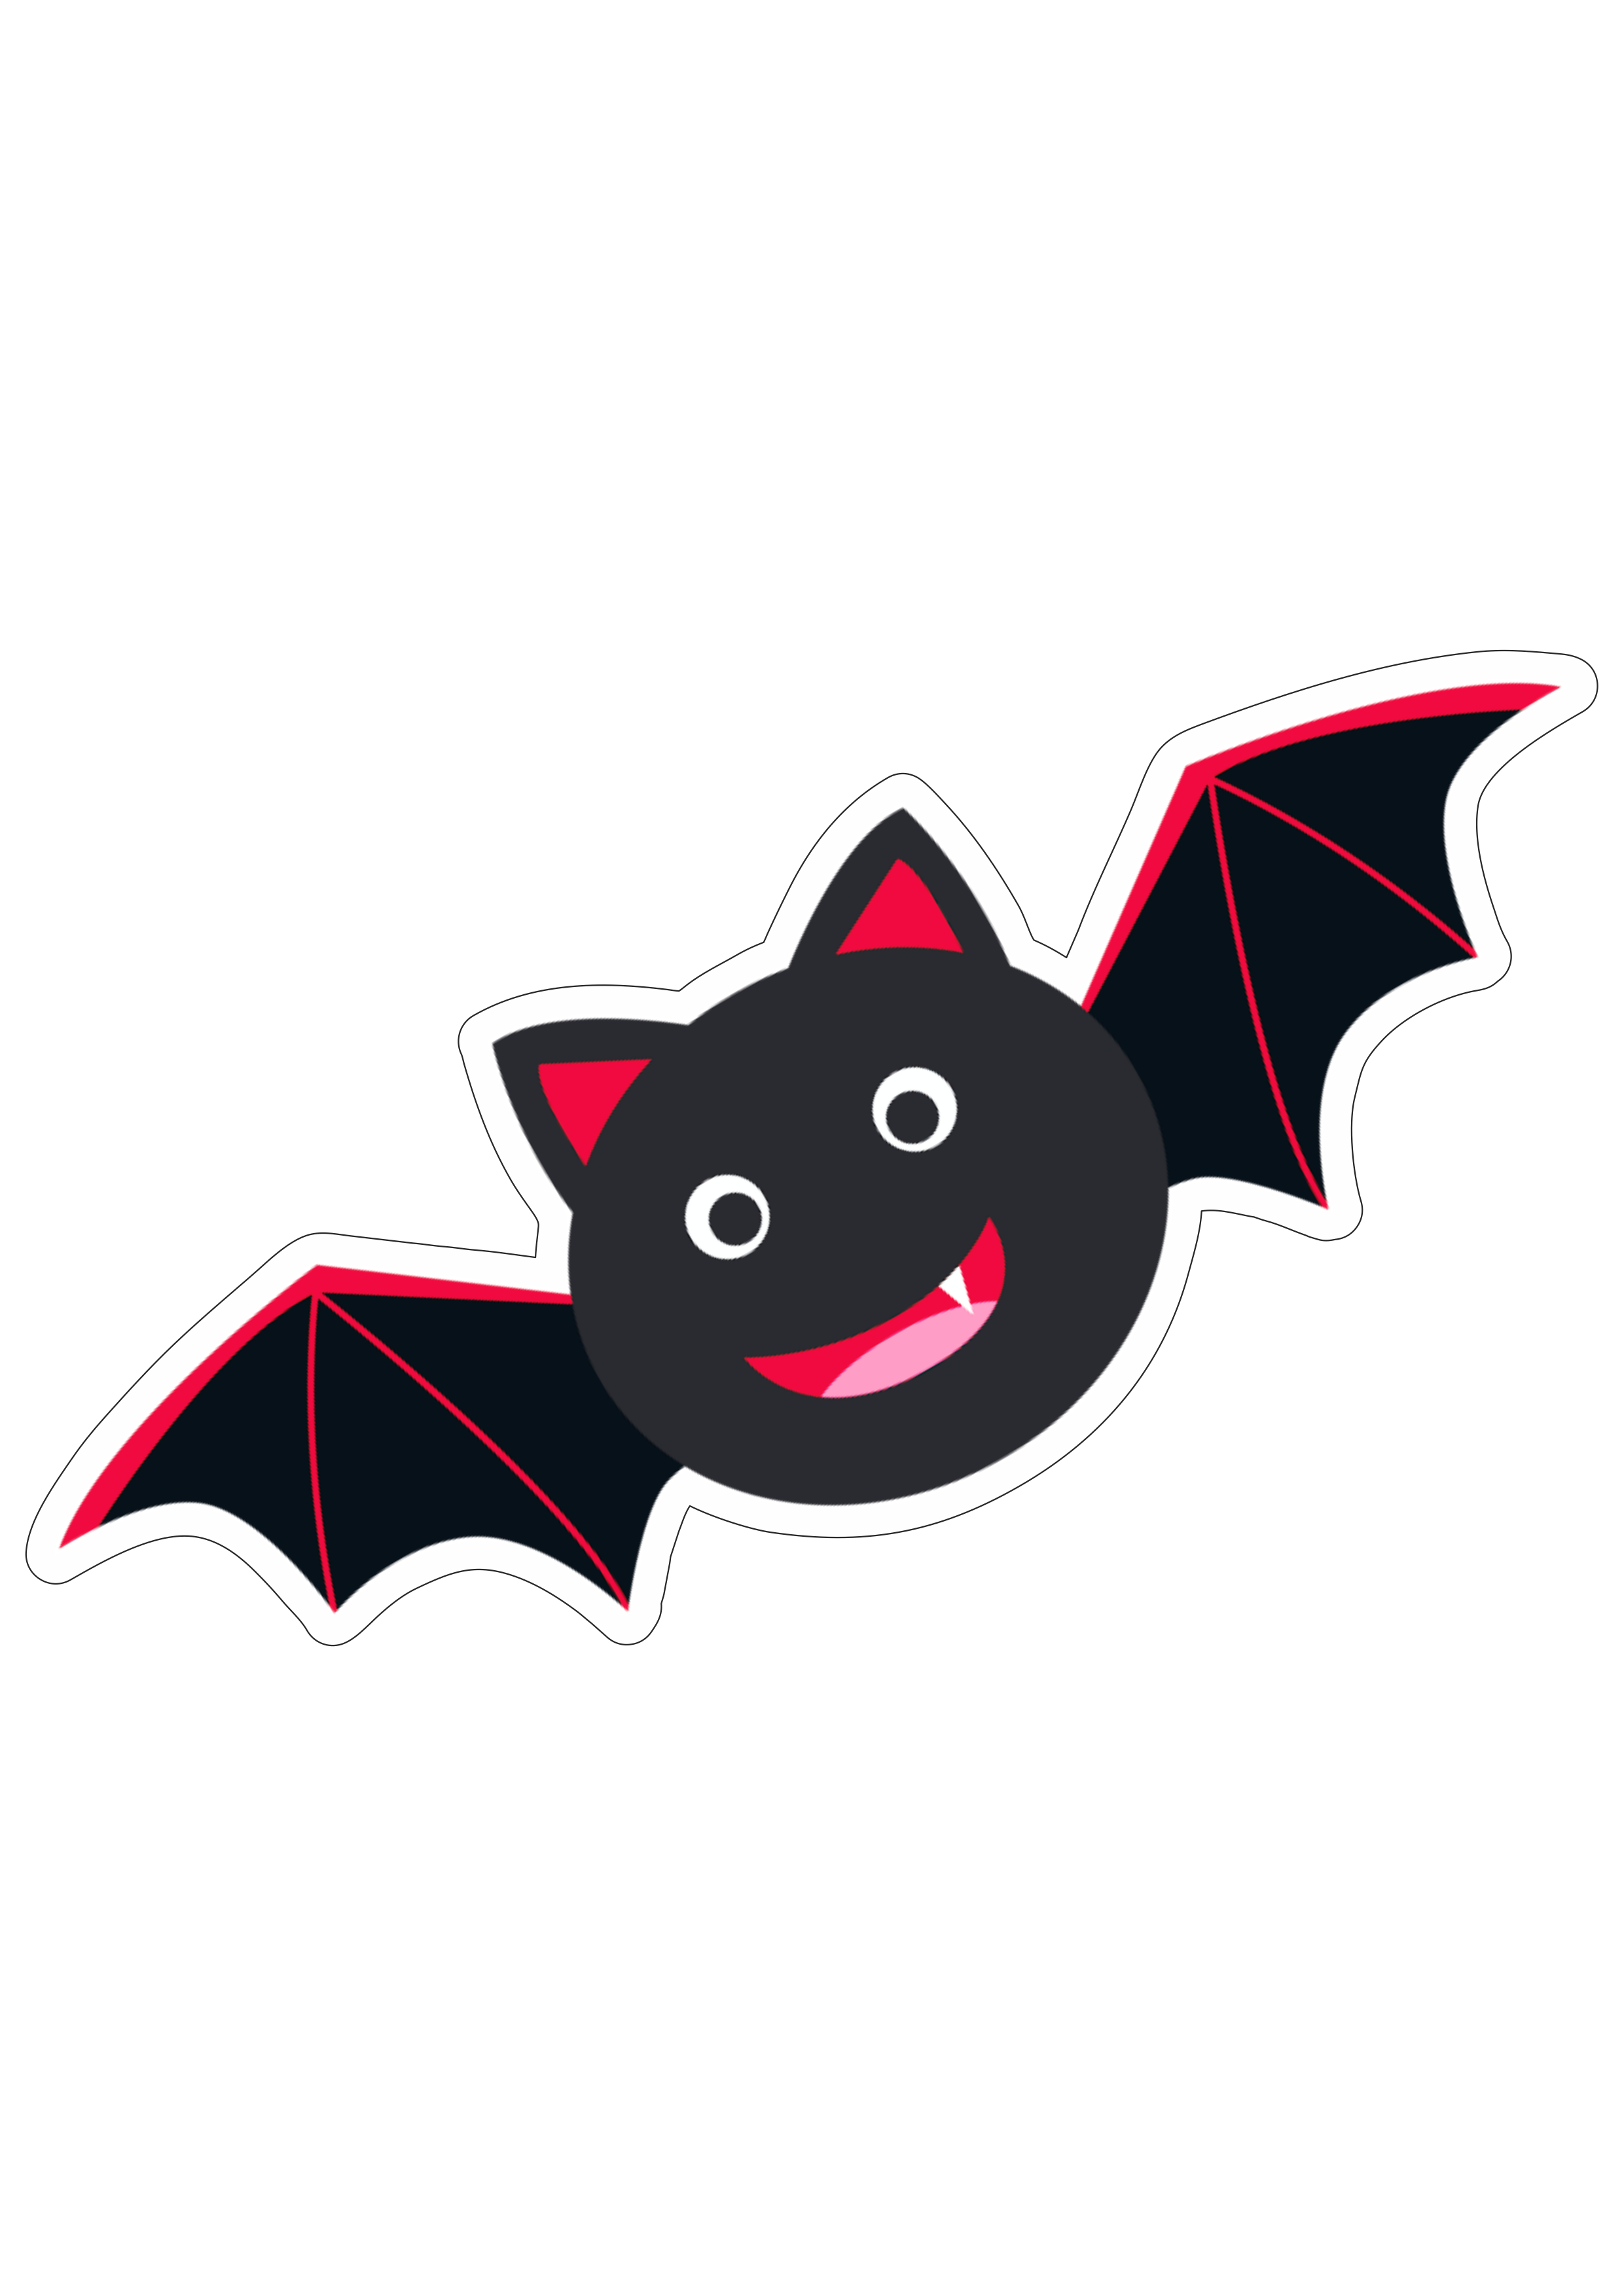 Halloween - Morcego Halloween Png, Transparent Png, free png download